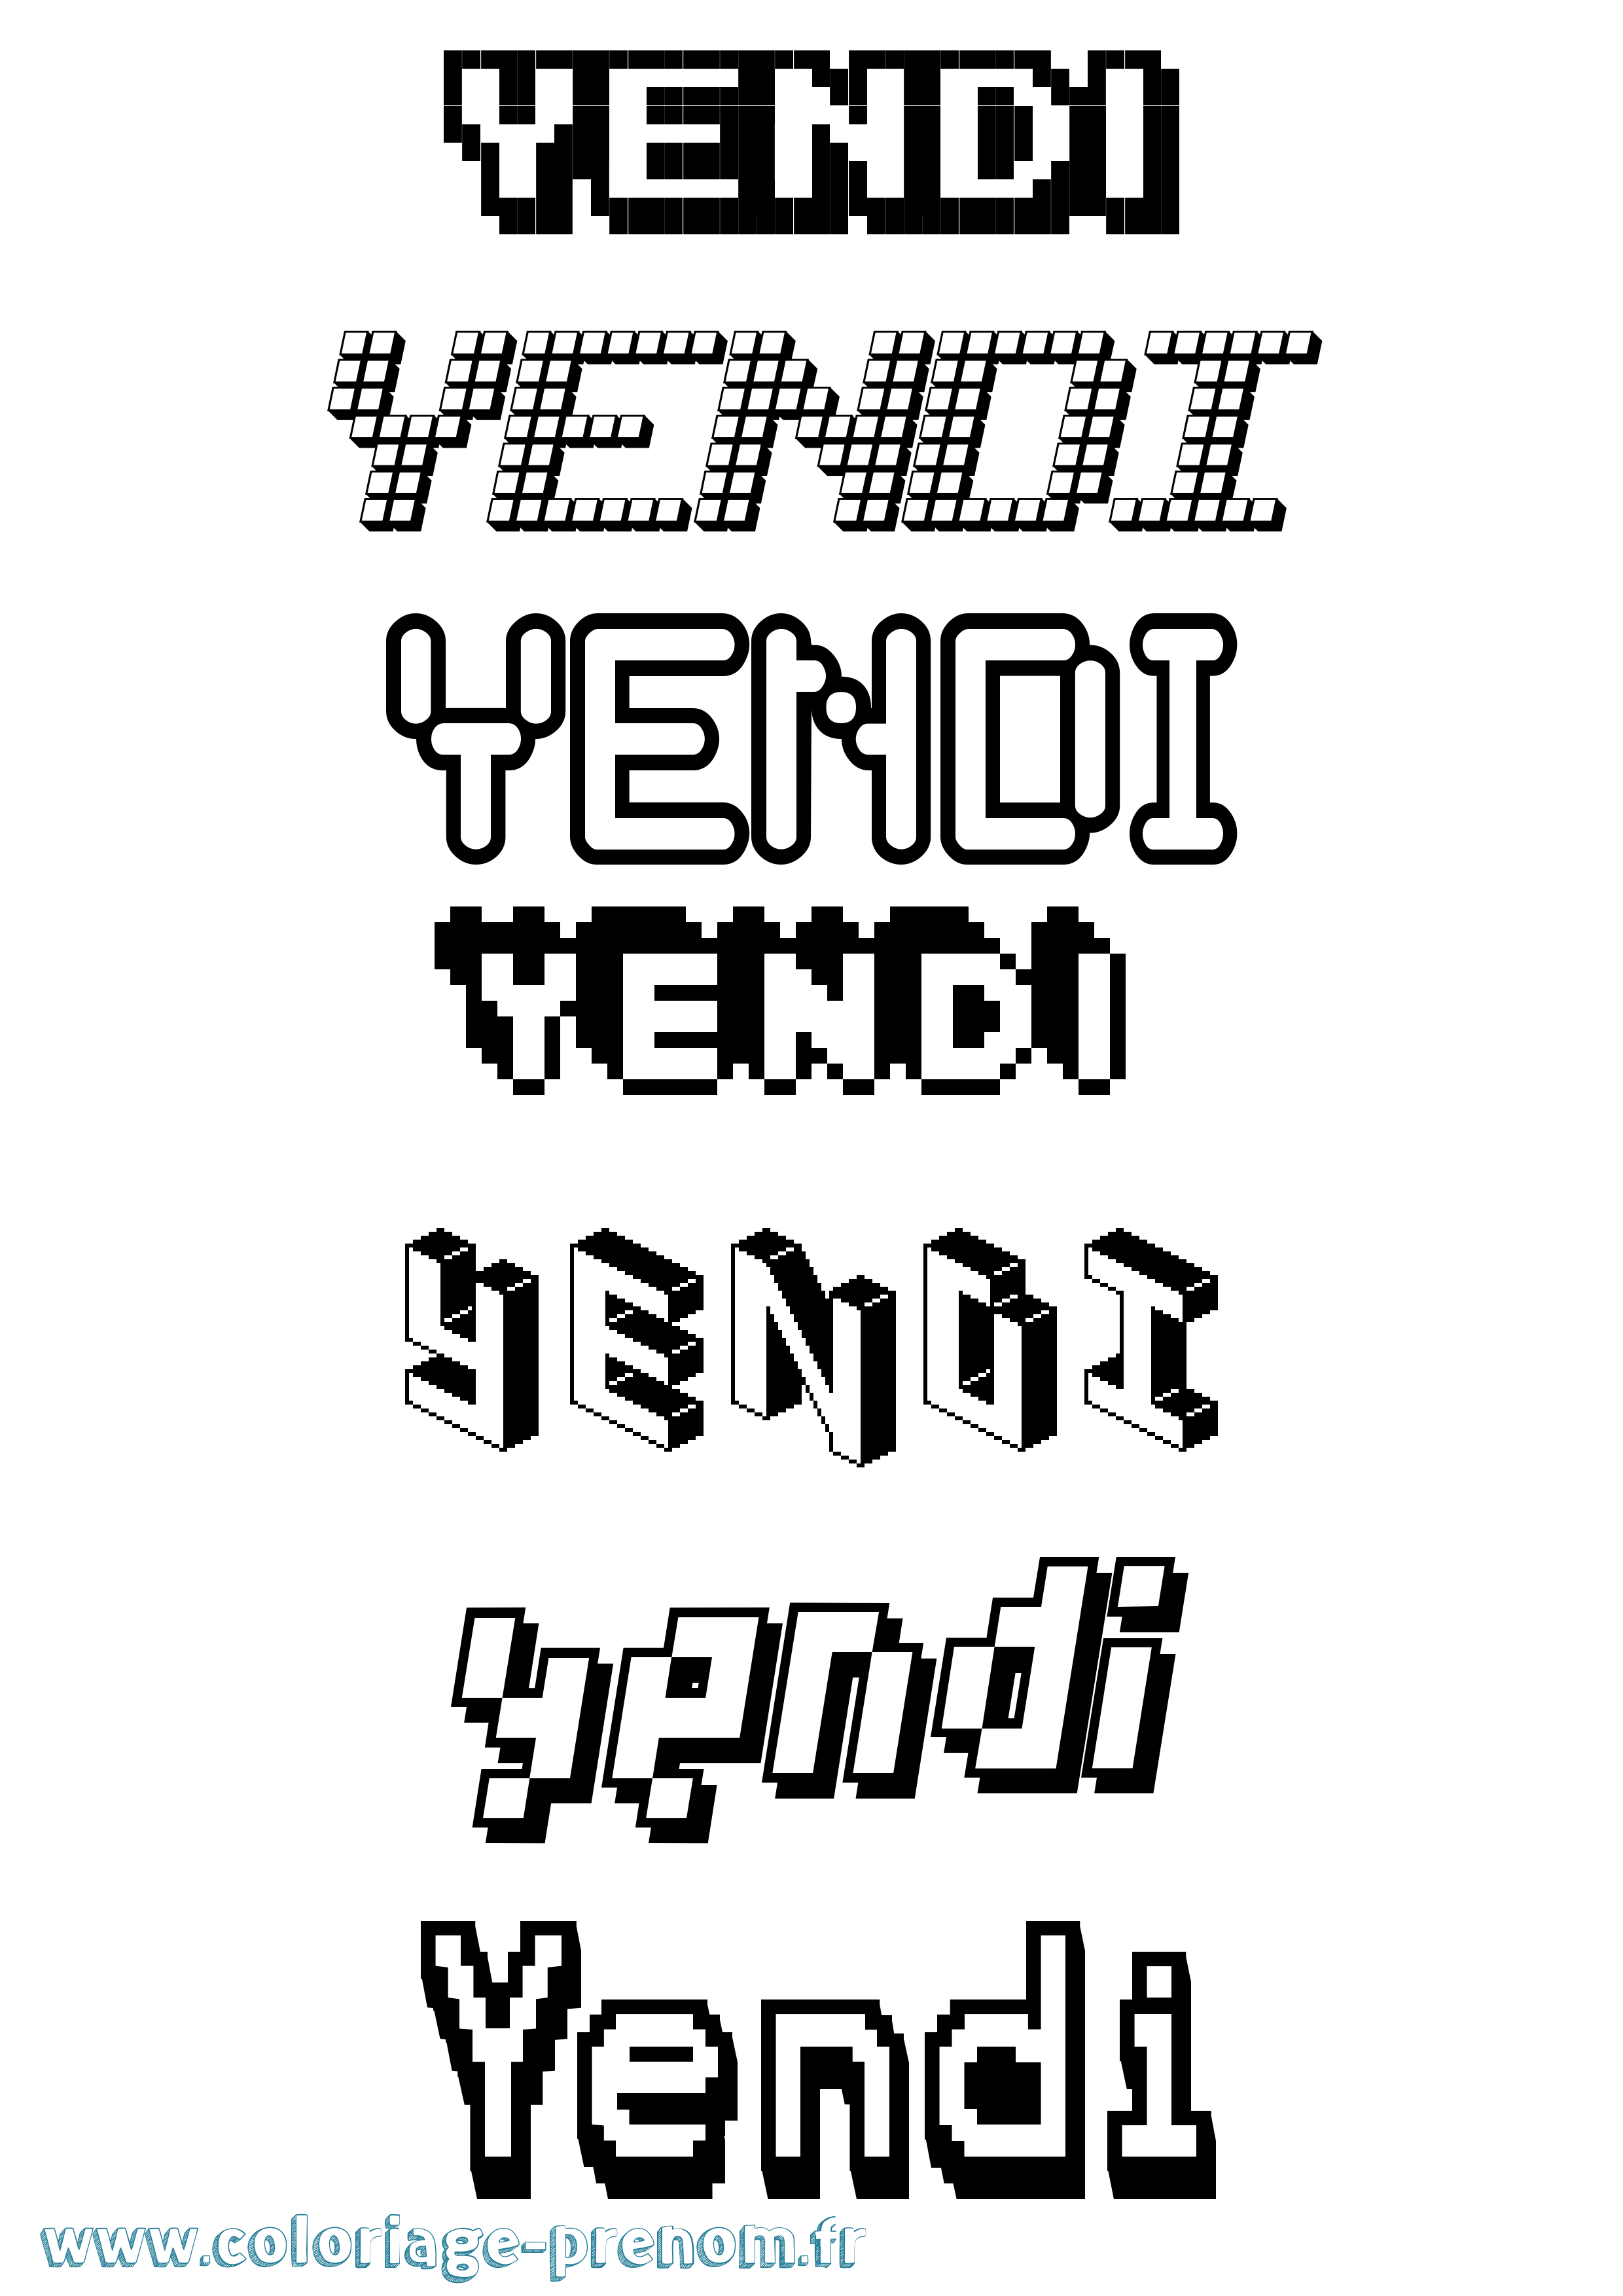 Coloriage prénom Yendi Pixel